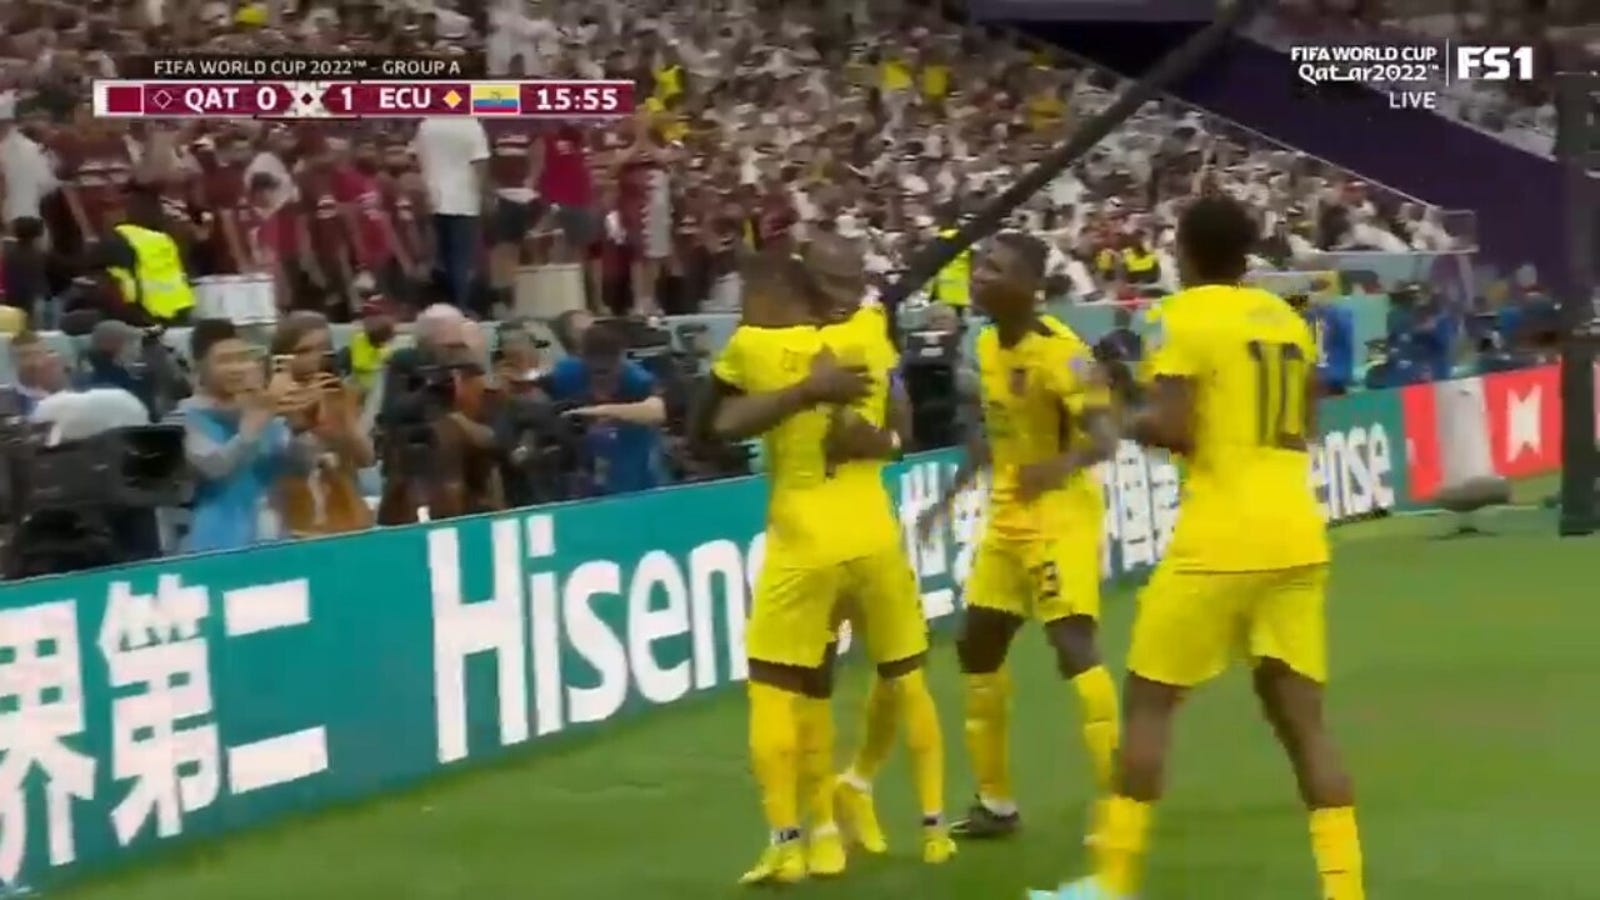 Ecuadors Ener Valencia foult im Strafraum und erzielt ein Kill Goal gegen Katar 